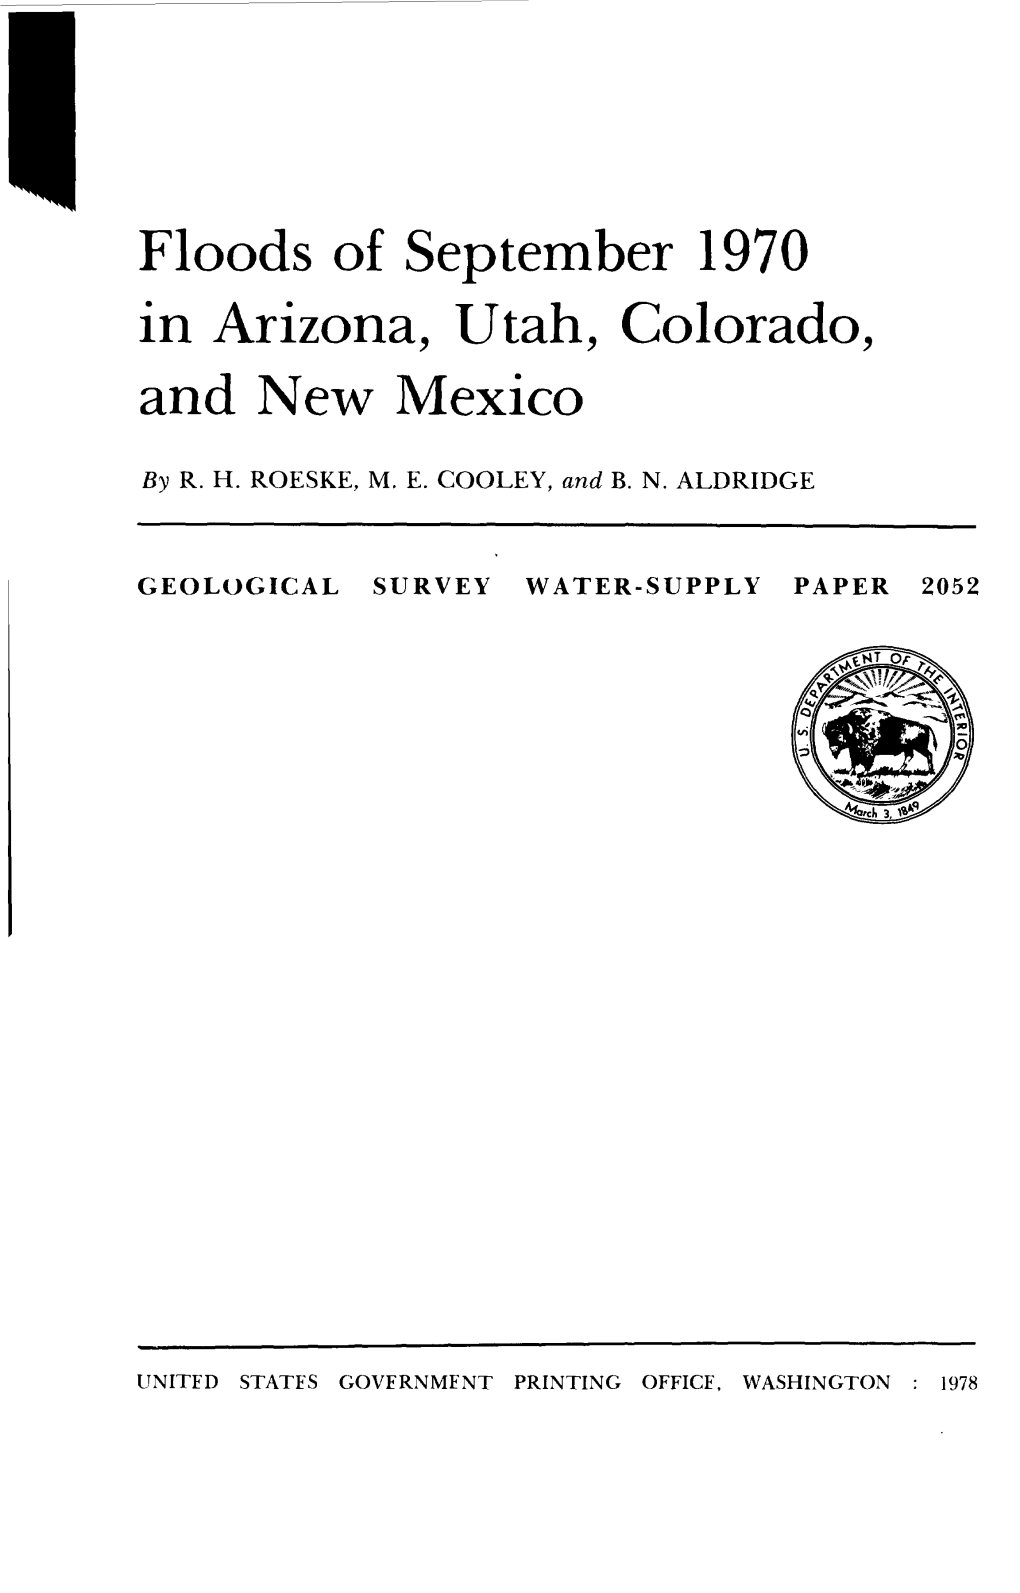 Floods of September 1970 in Arizona, Utah, Colorado, and New Mexico